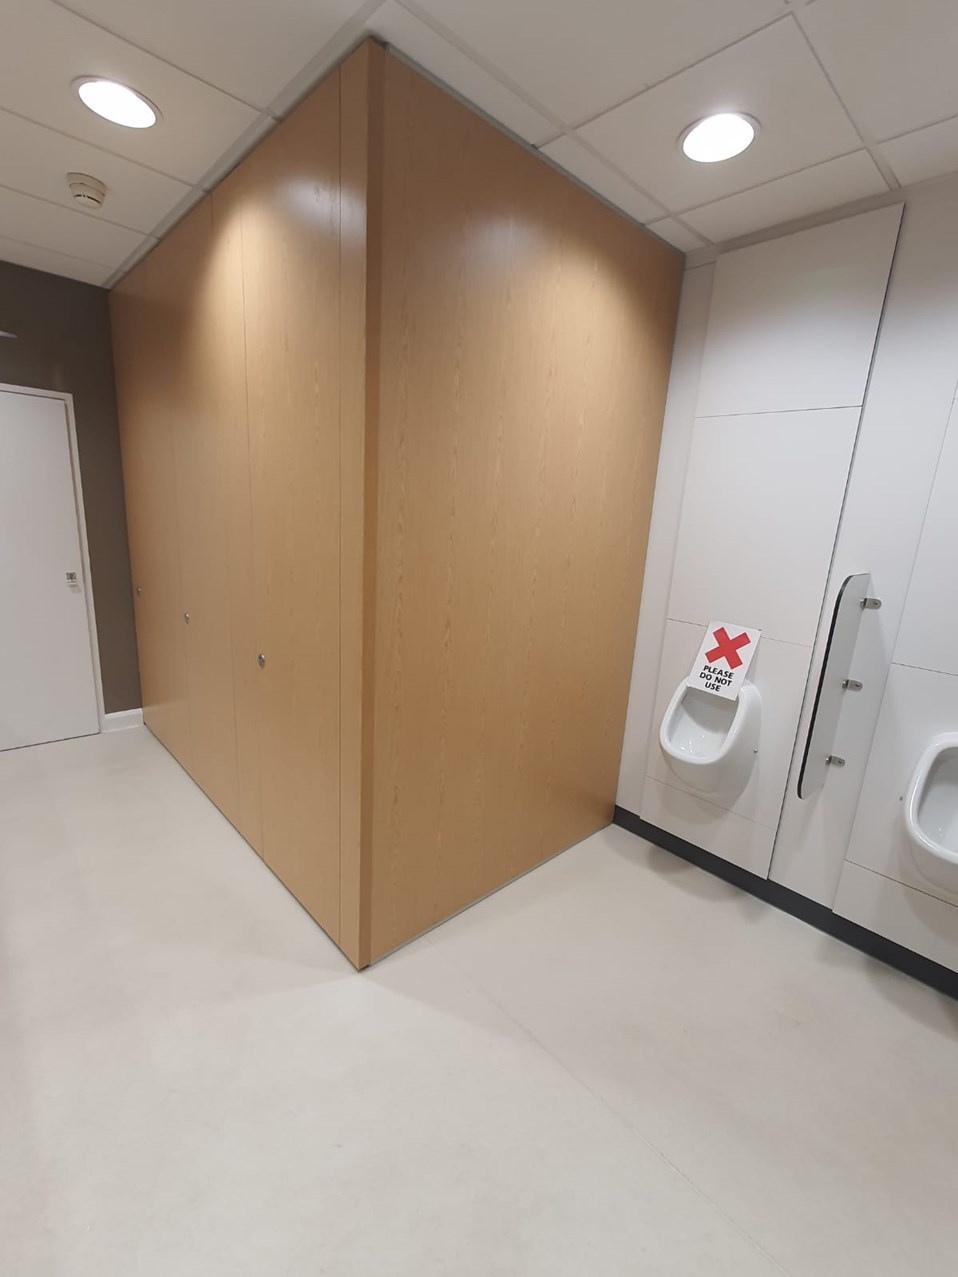 venesta-washrooms-veneer-toilet-cubicles-urinals-modesty-screens-citibank-data-centre